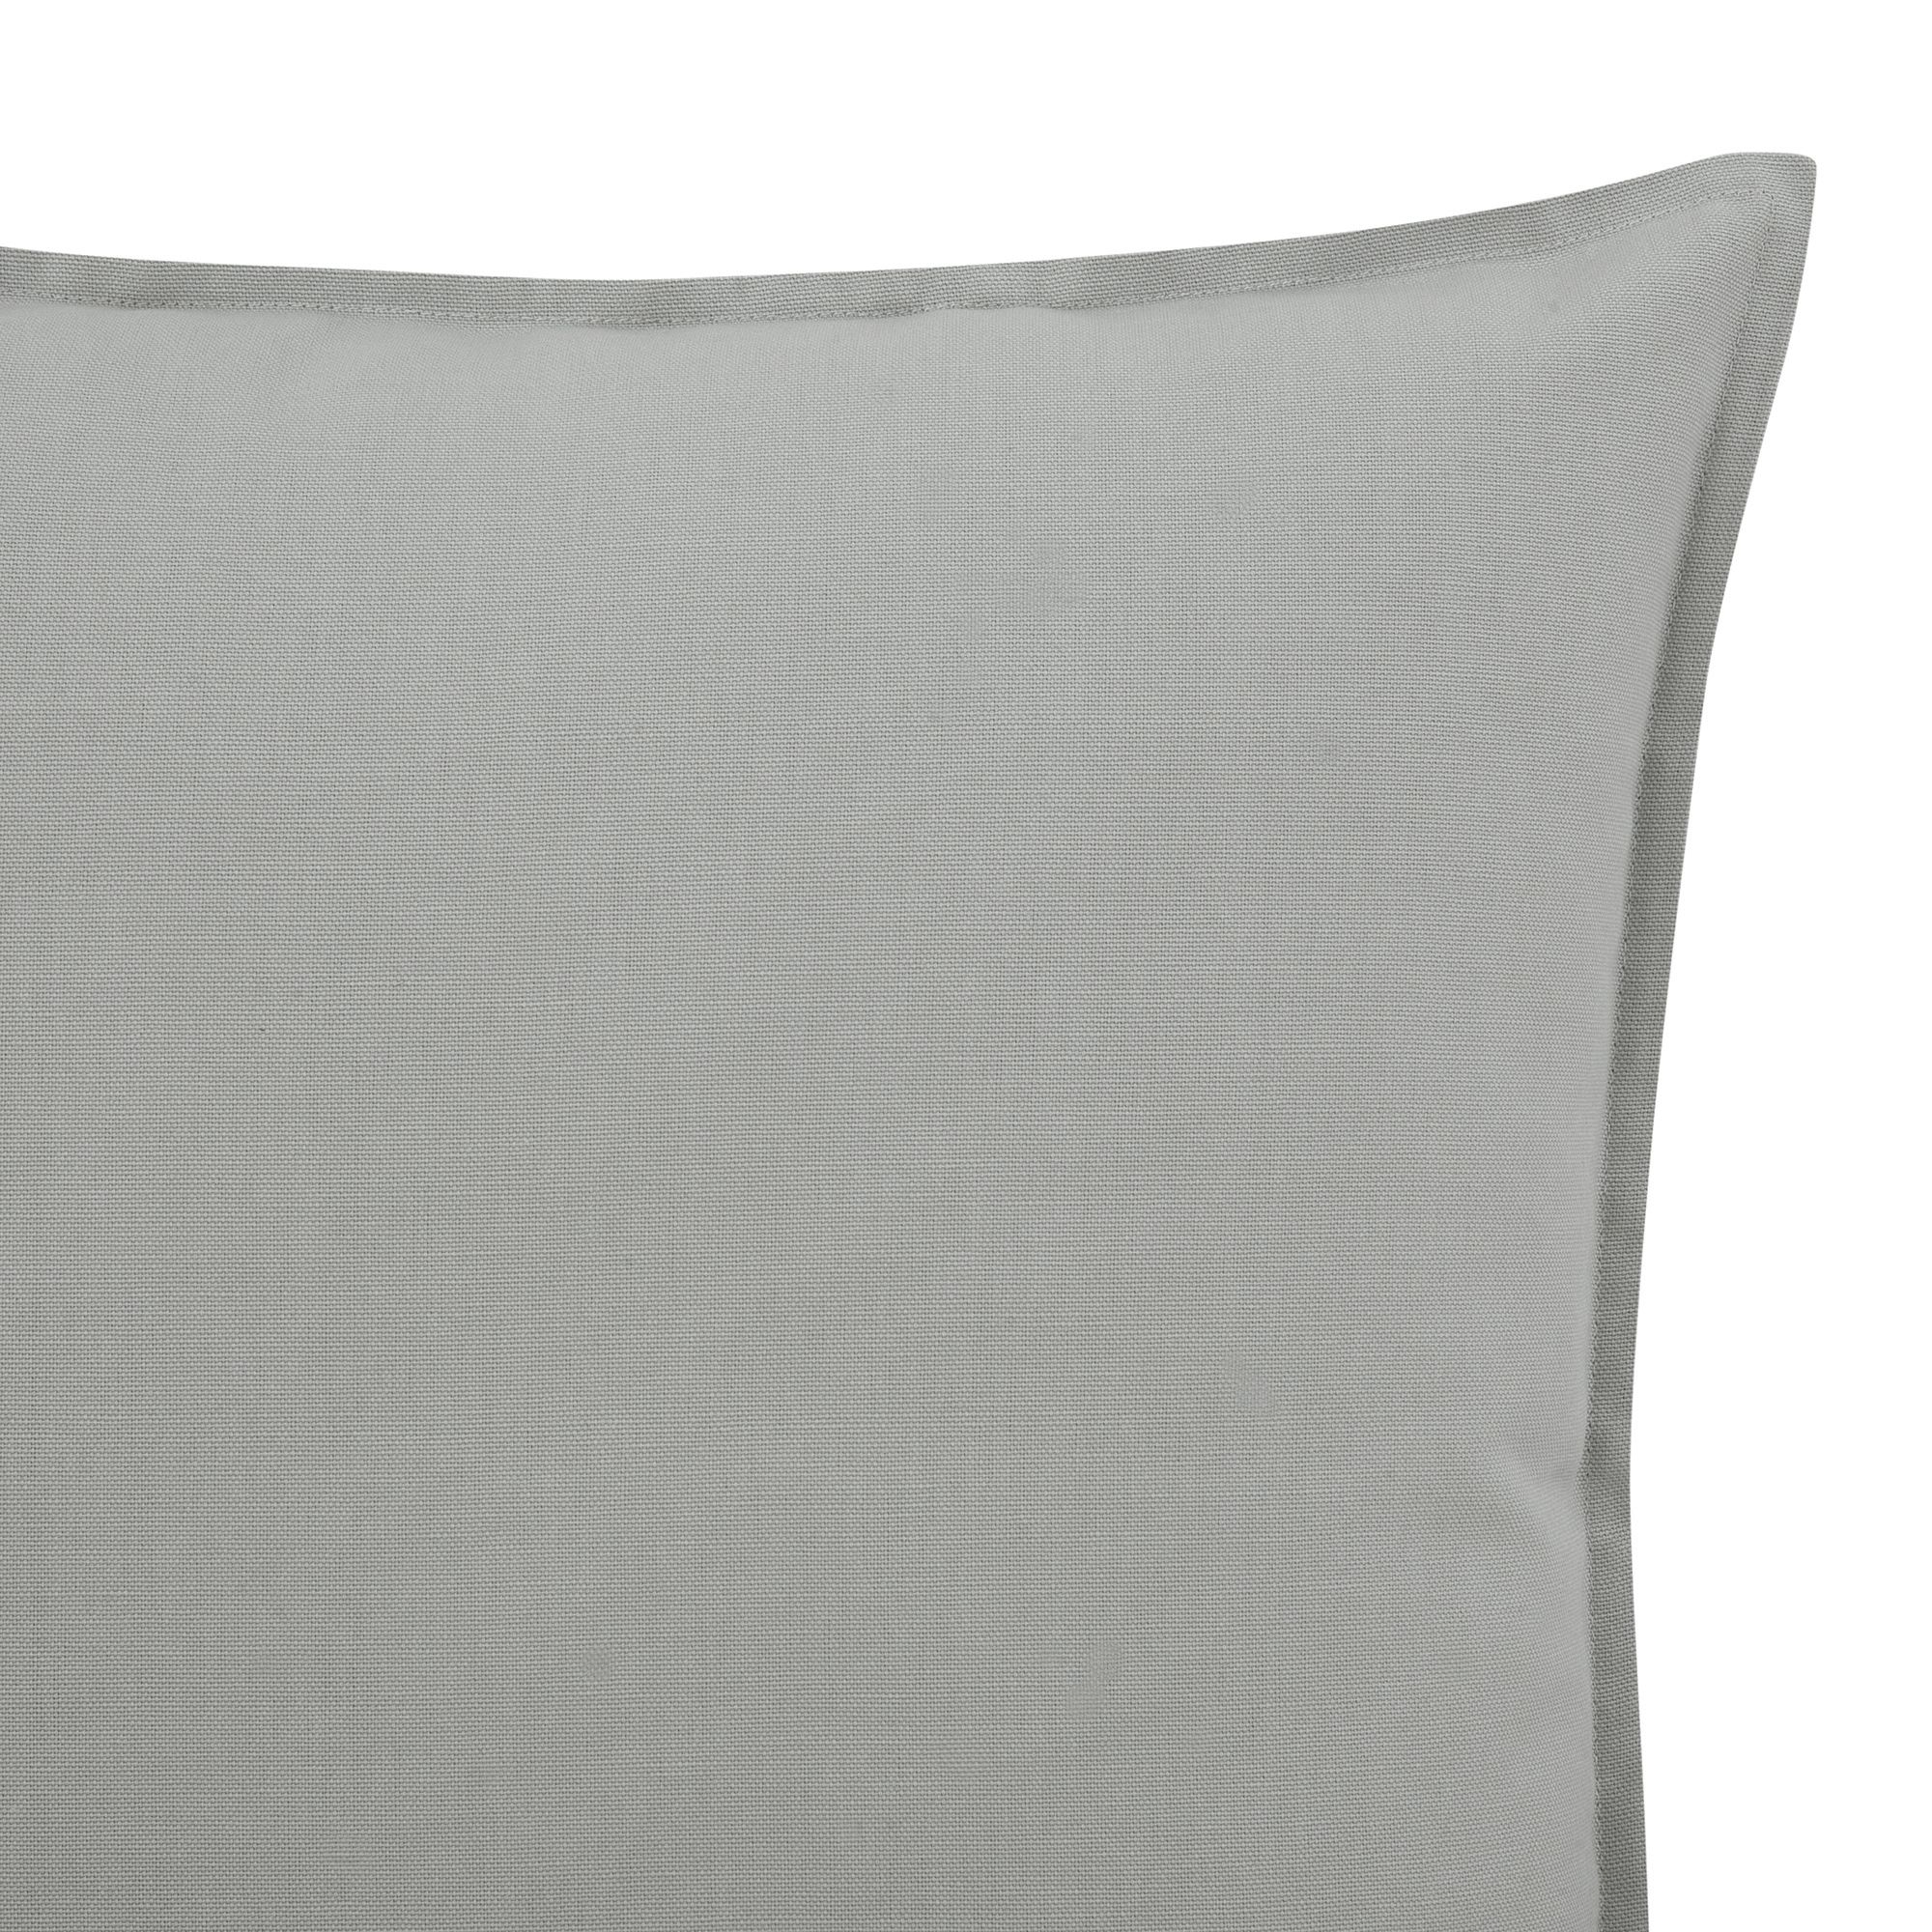 GoodHome Hiva Grey Plain Indoor Cushion (L)60cm x (W)60cm